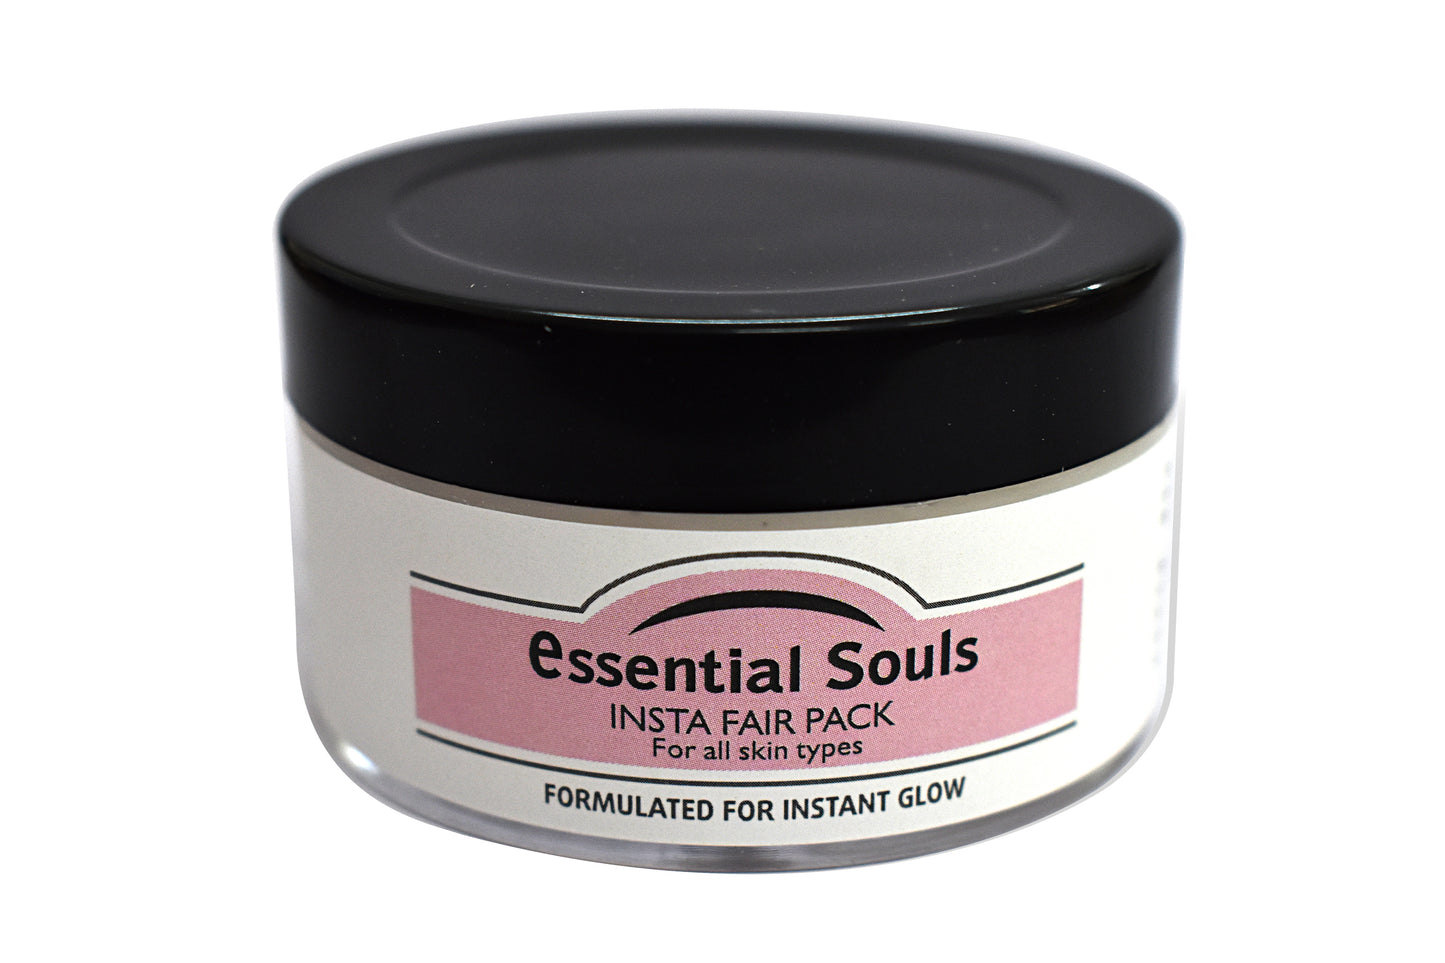 Essential Souls Insta Fair Pack - 50g